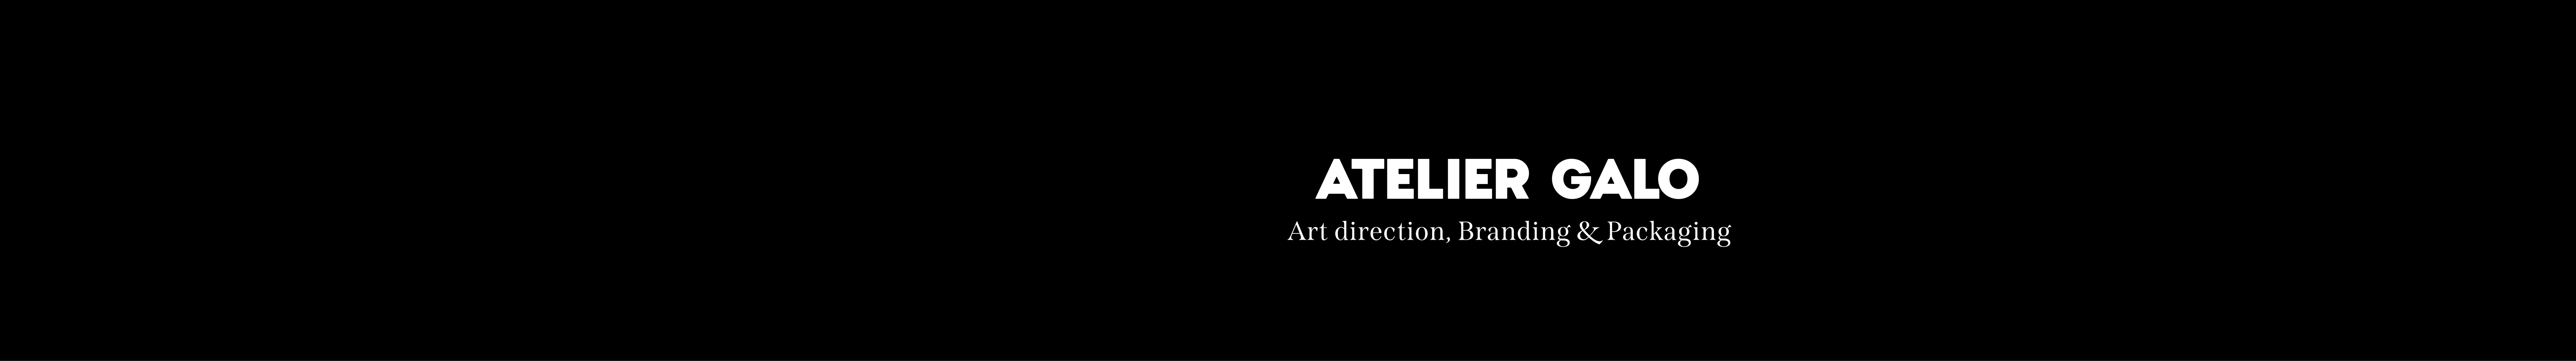 Atelier Galo's profile banner